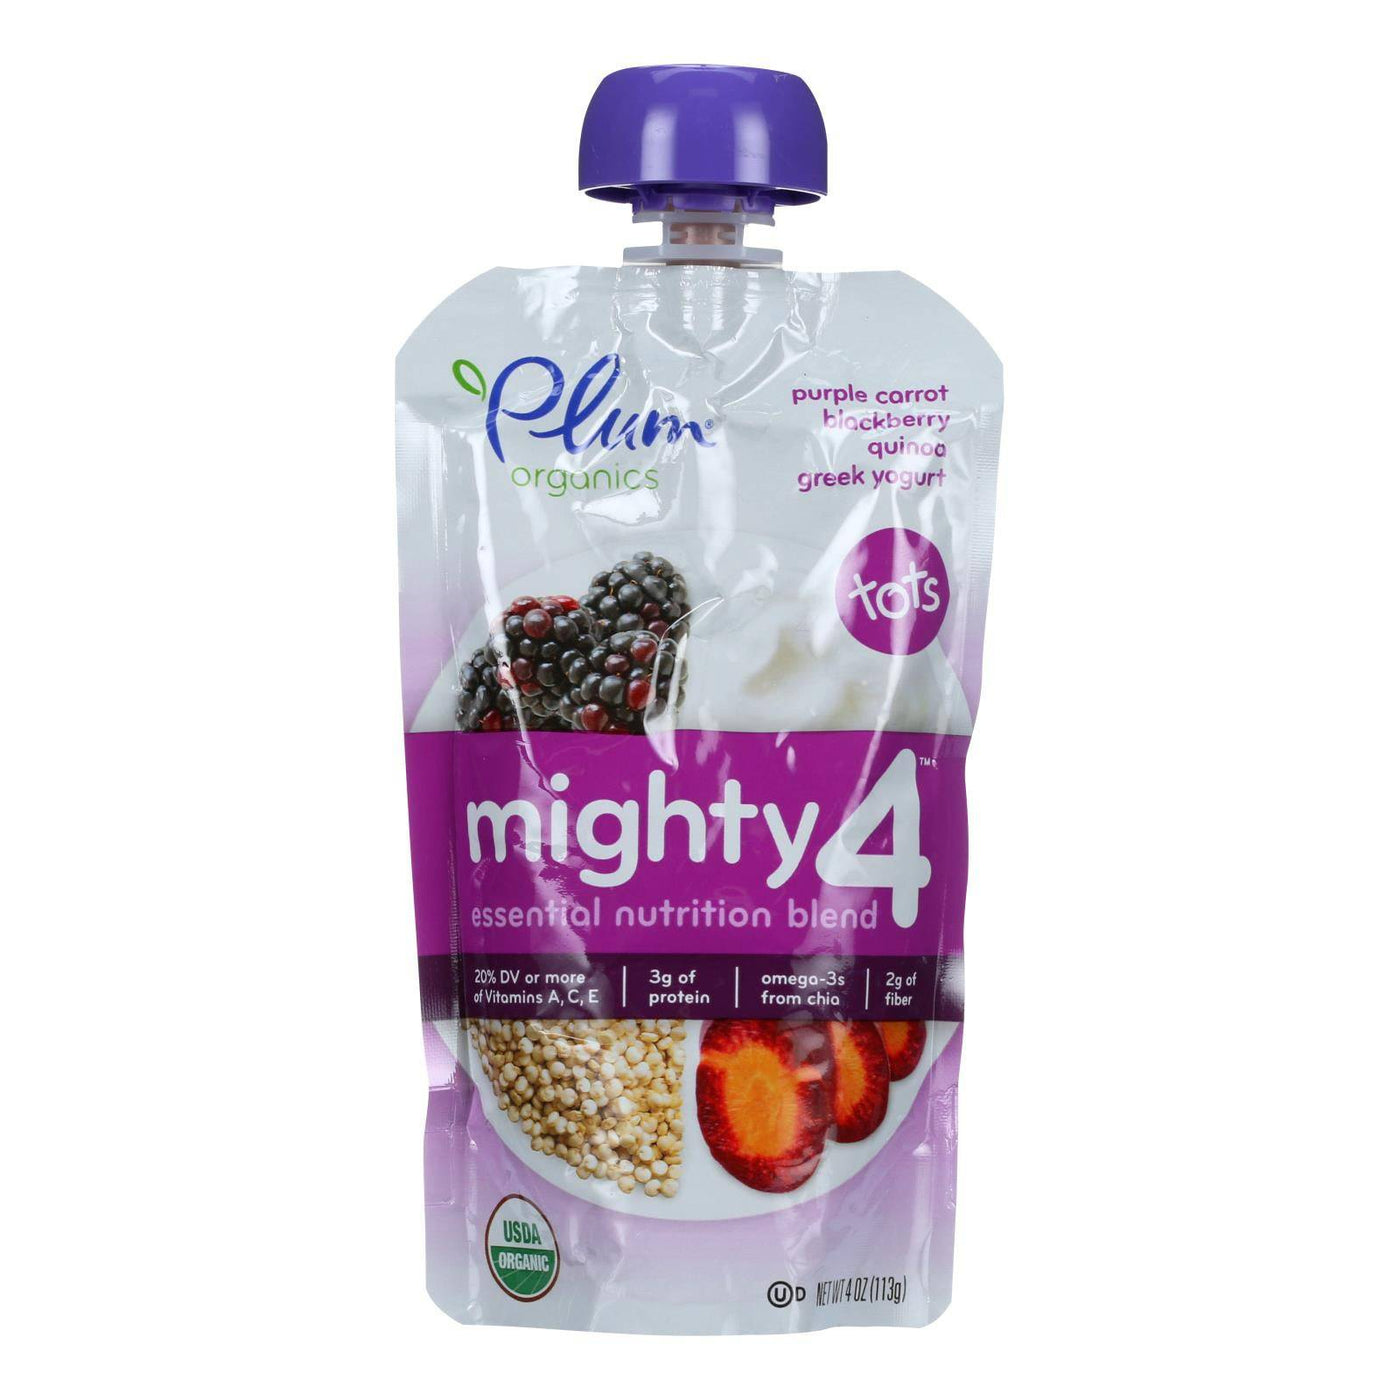 Buy Plum Organics Essential Nutrition Blend - Mighty 4 - Purple Carrot Blackberry Quinoa Greek Yogurt - 4 Oz - Case Of 6  at OnlyNaturals.us